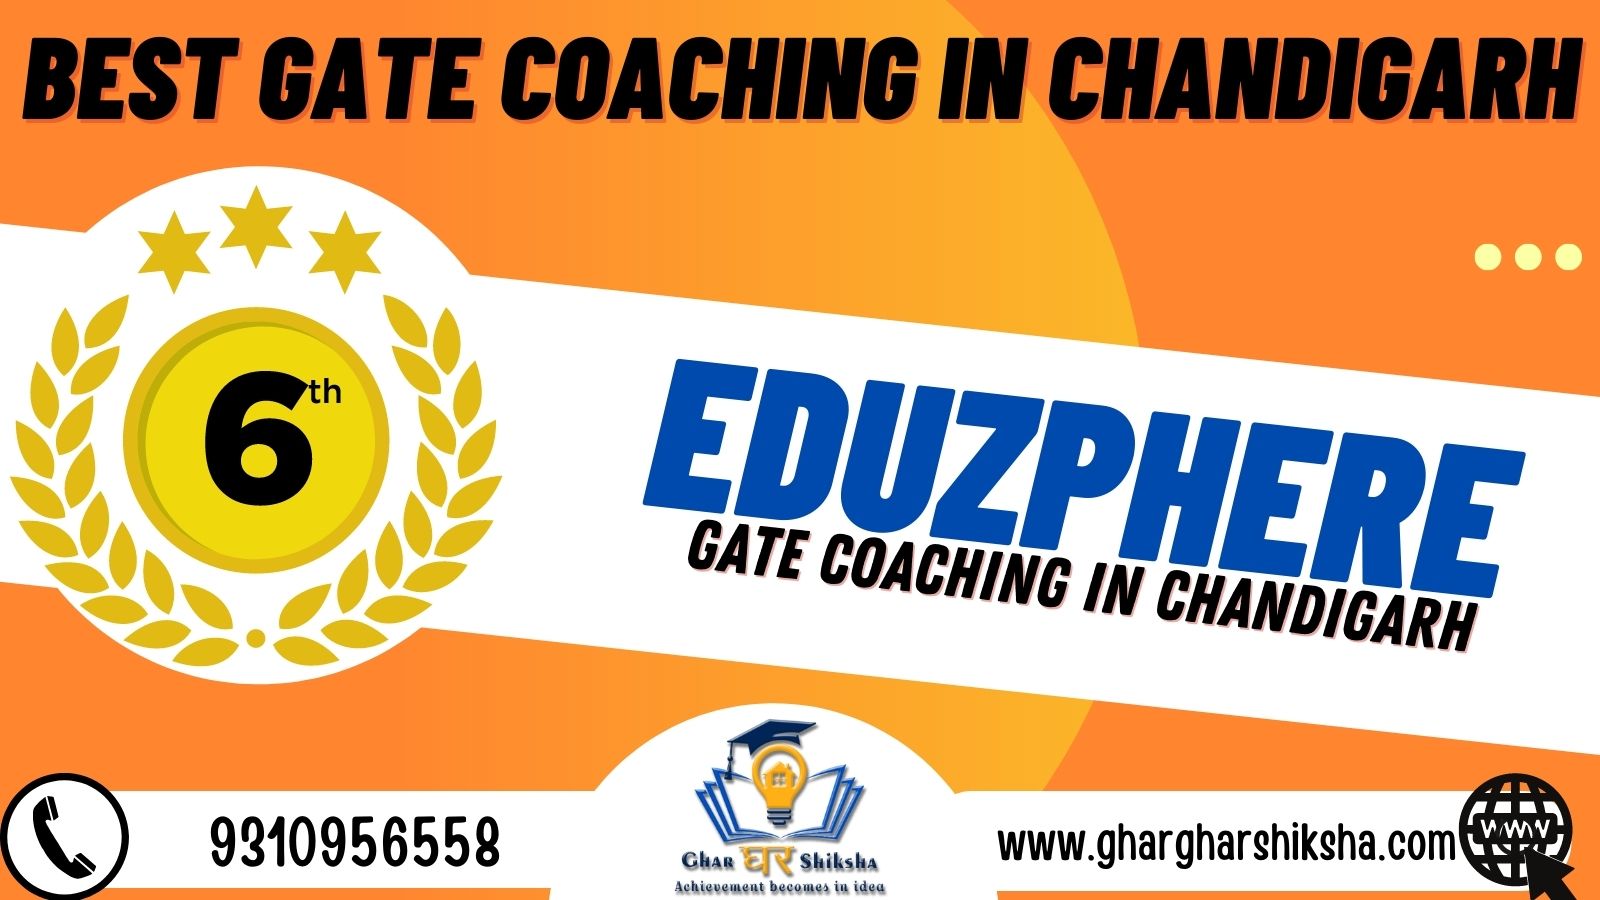 Best GATE Coaching In Chandigarh